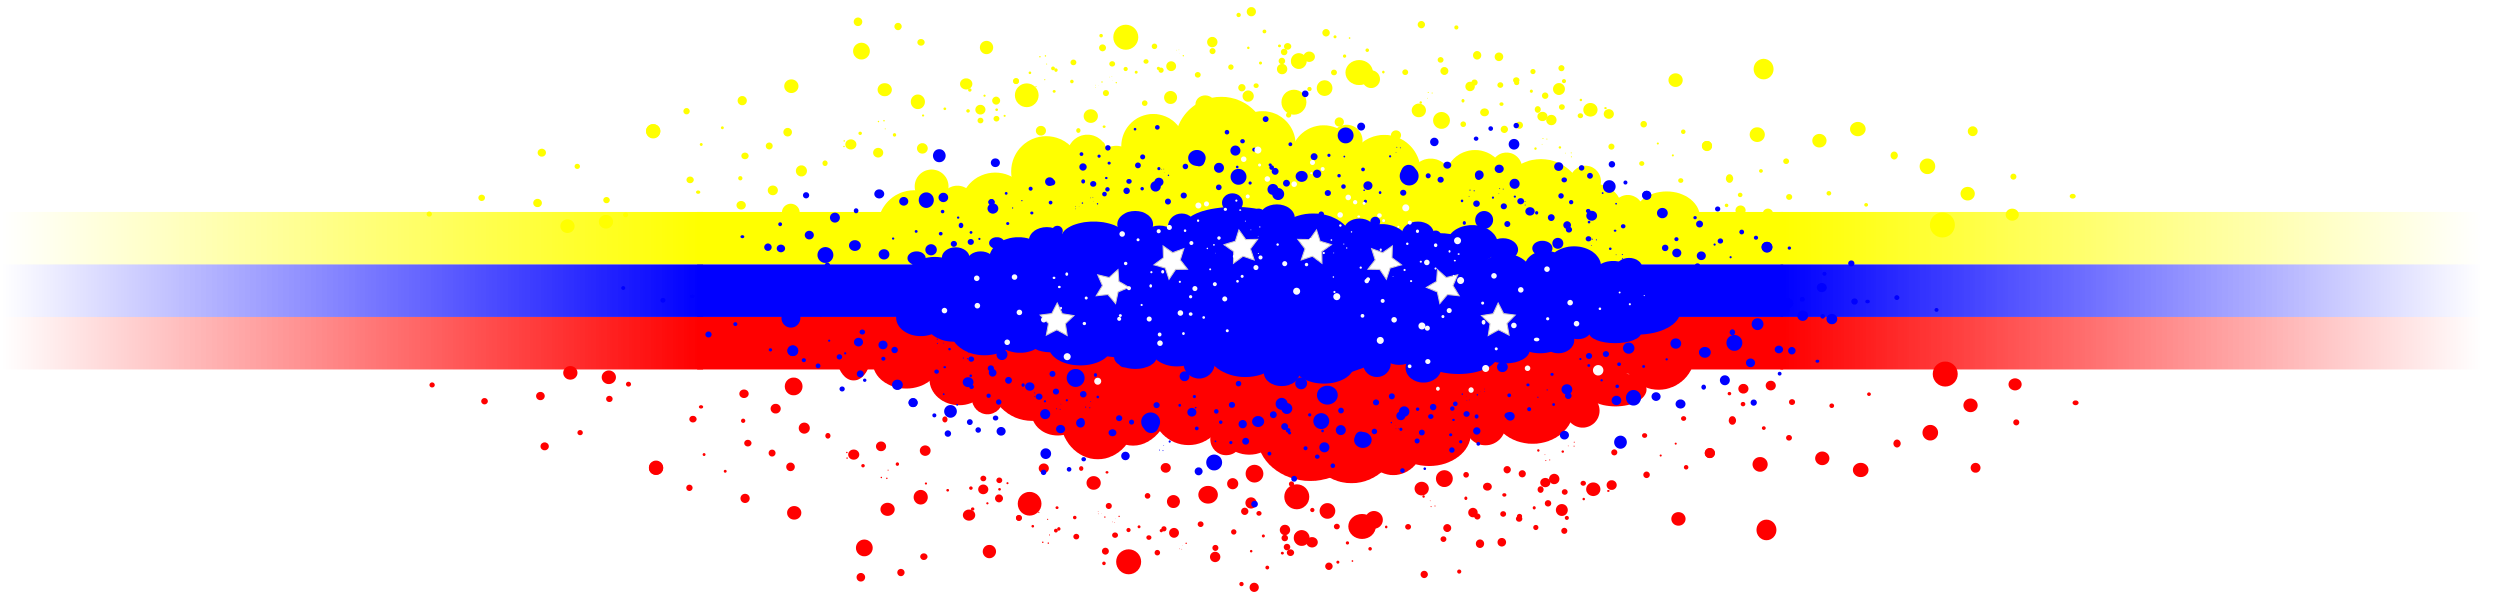 Venezuela Bandera